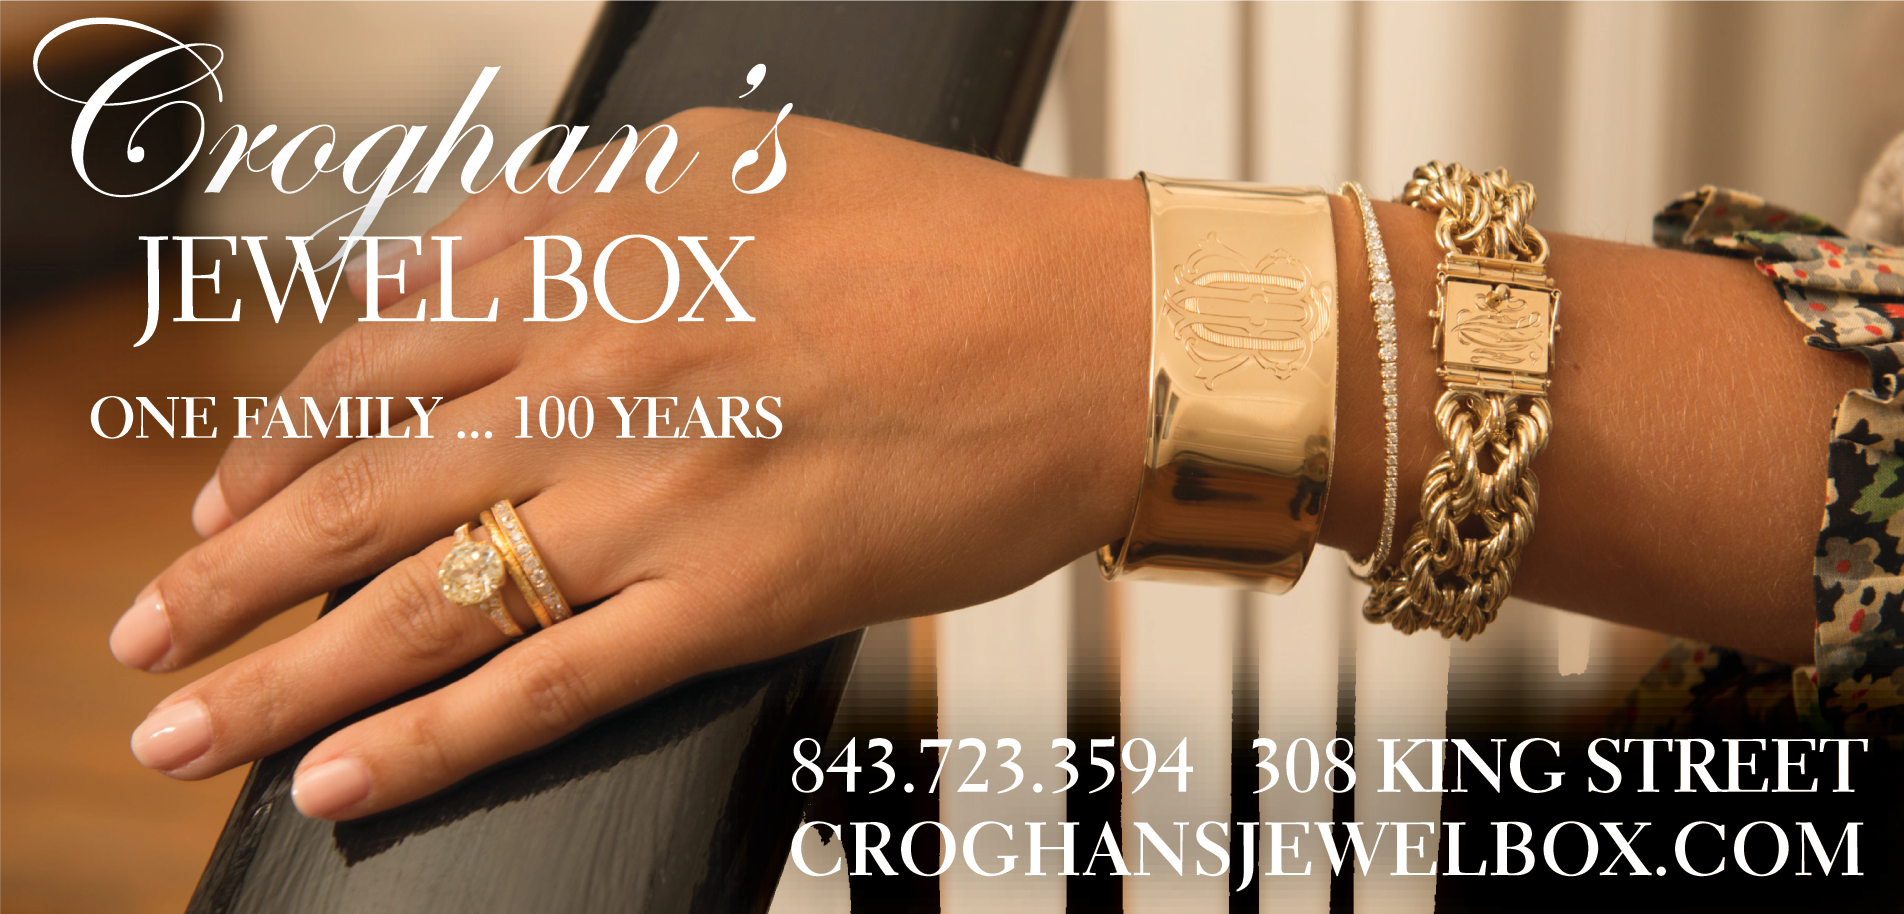 Croghan's Jewel Box Print Ad